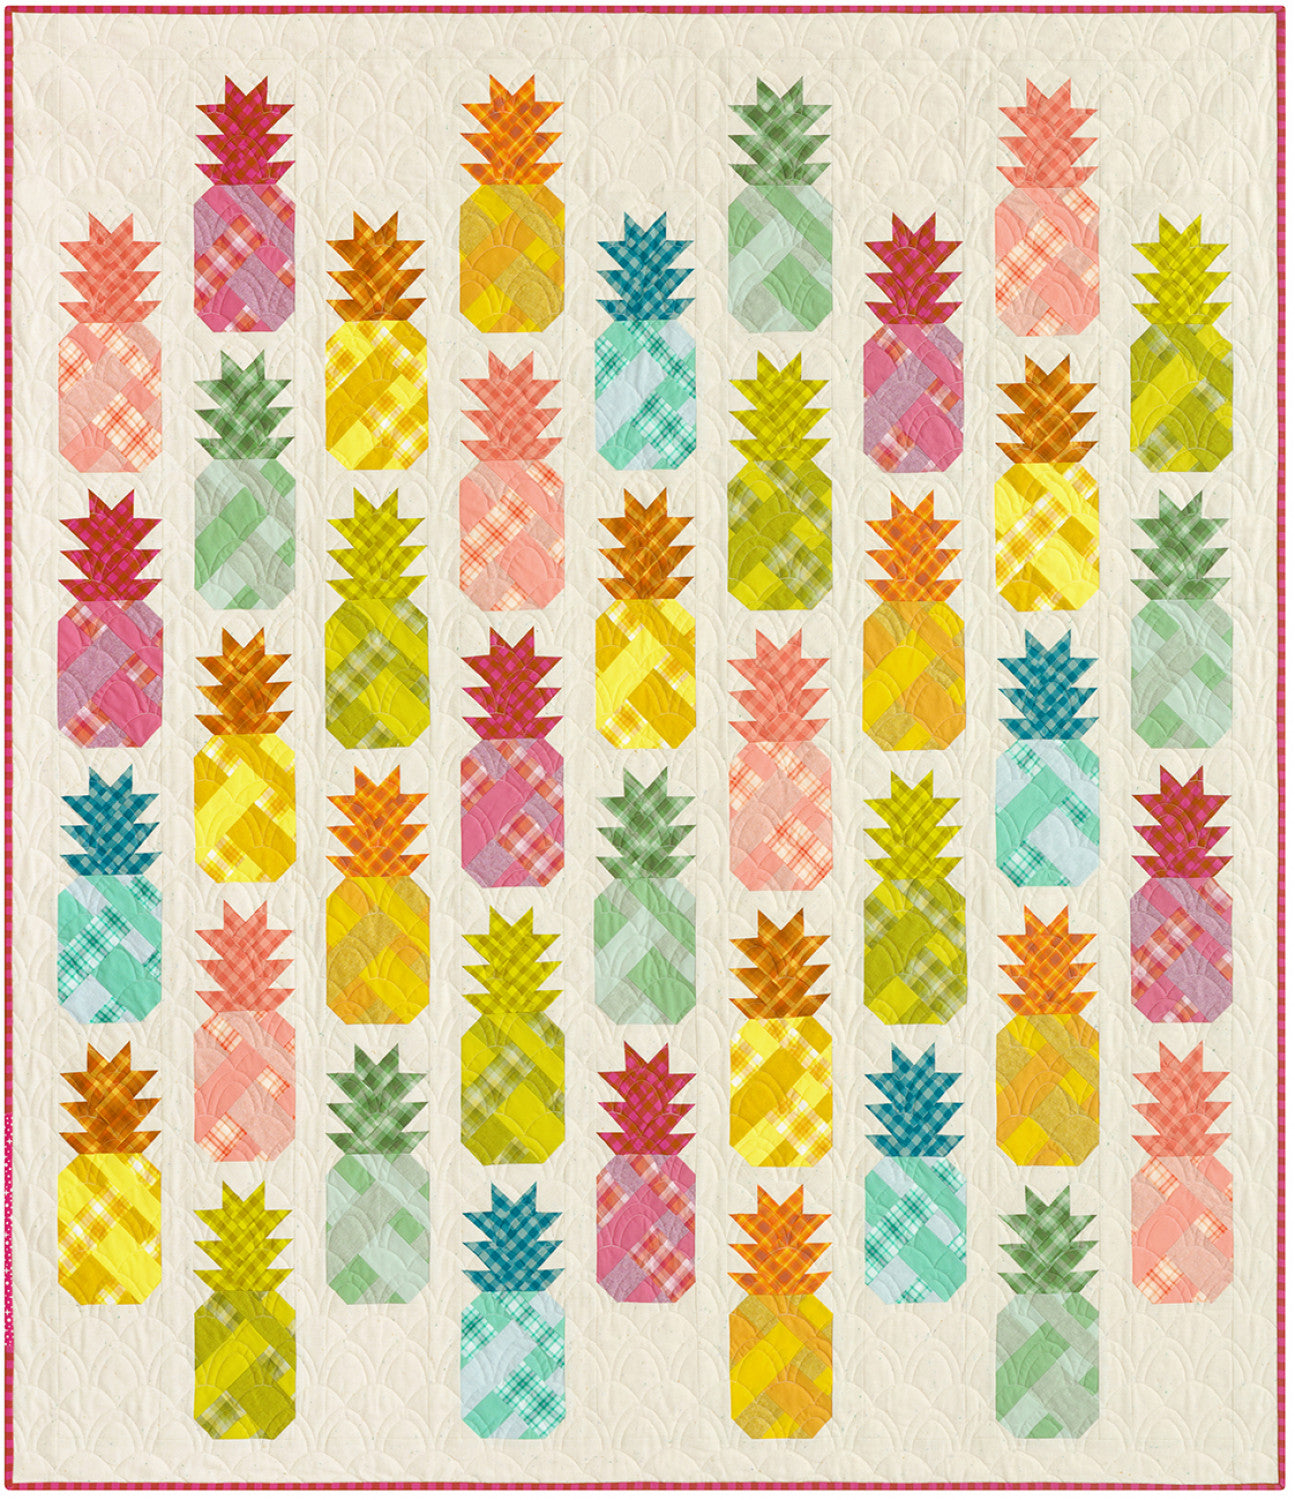 Pineapple Farm Quilt Kit by Elizabeth Hartman - Kitchen Window Wovens (60"x70")